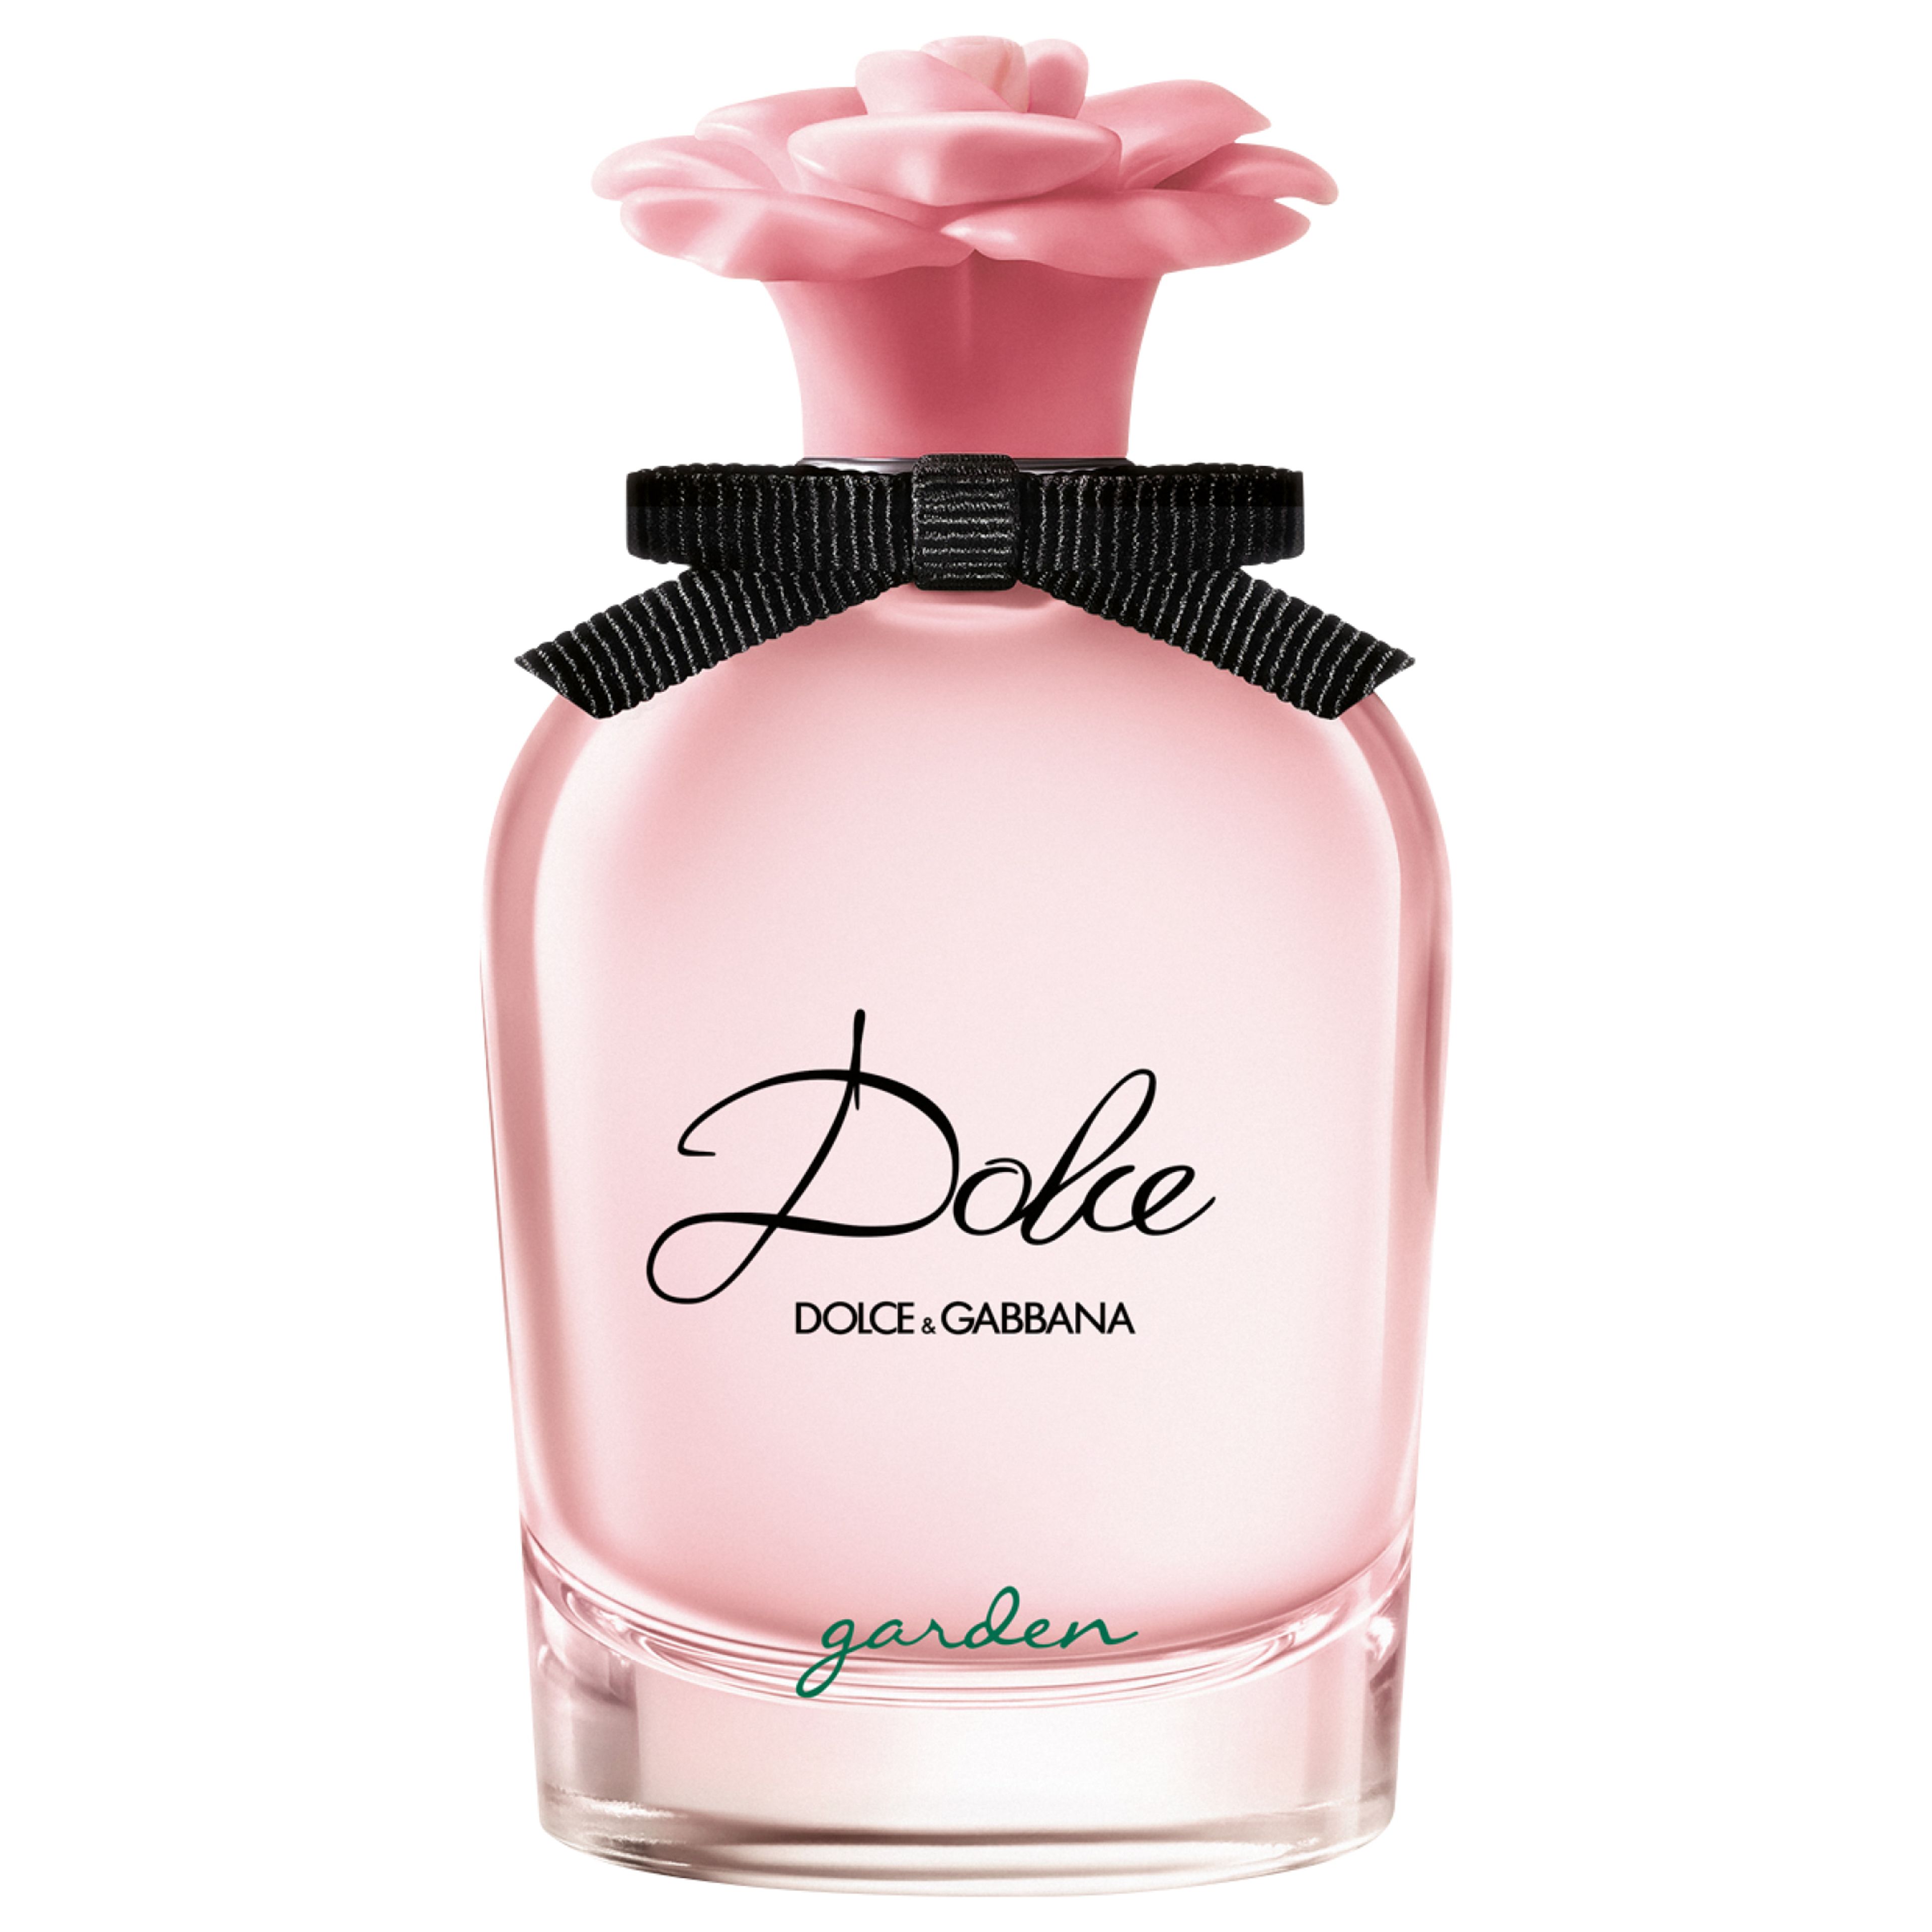 Dolce & Gabbana Dolce Garden Eau De Parfum 1